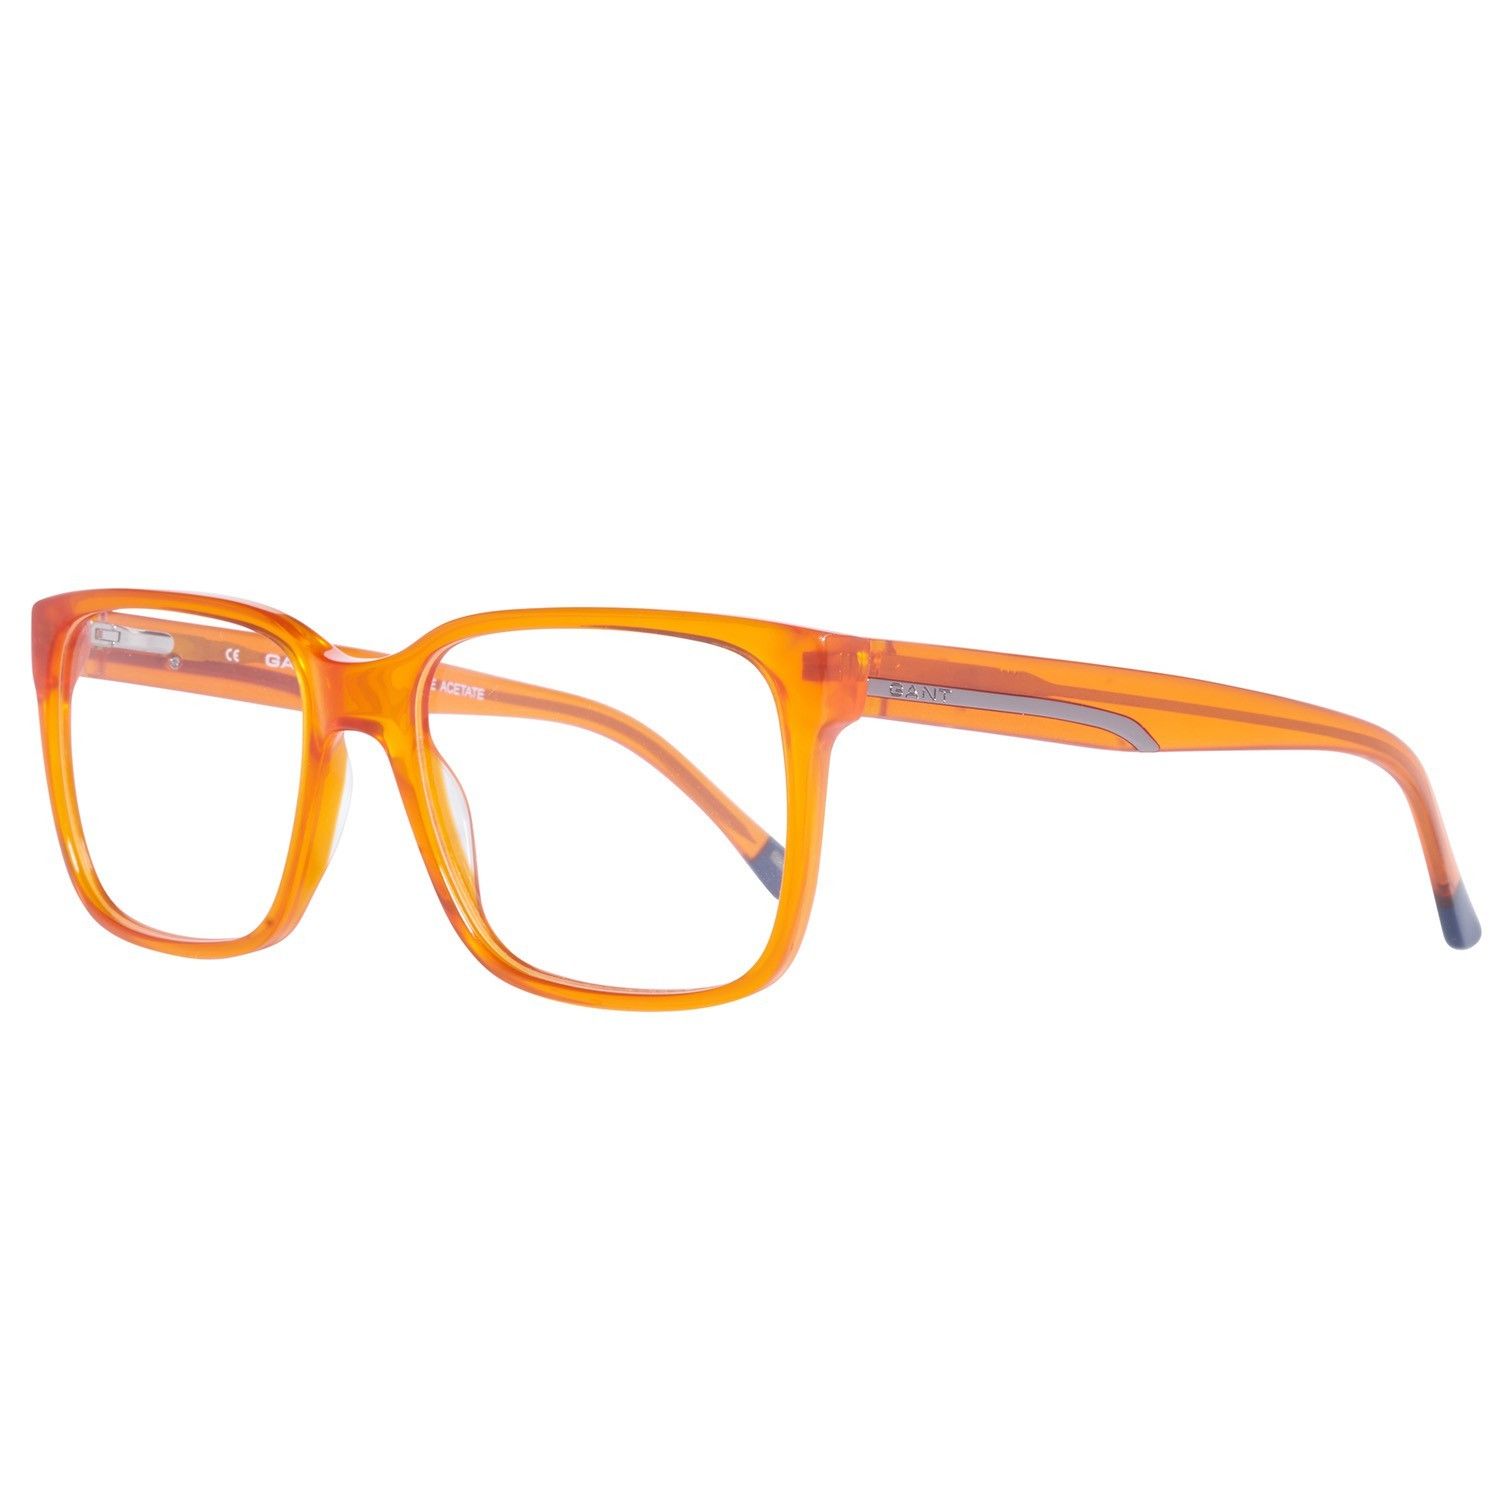 Gant Optical Frame GA3055 042 54
Frame color: Orange
Lenses width: 54
Lenses heigth: 41
Bridge length: 17
Frame width: 135
Temple length: 145
Shipment includes: Case, Cleaning cloth
Style: Full-Rim
Men: Men